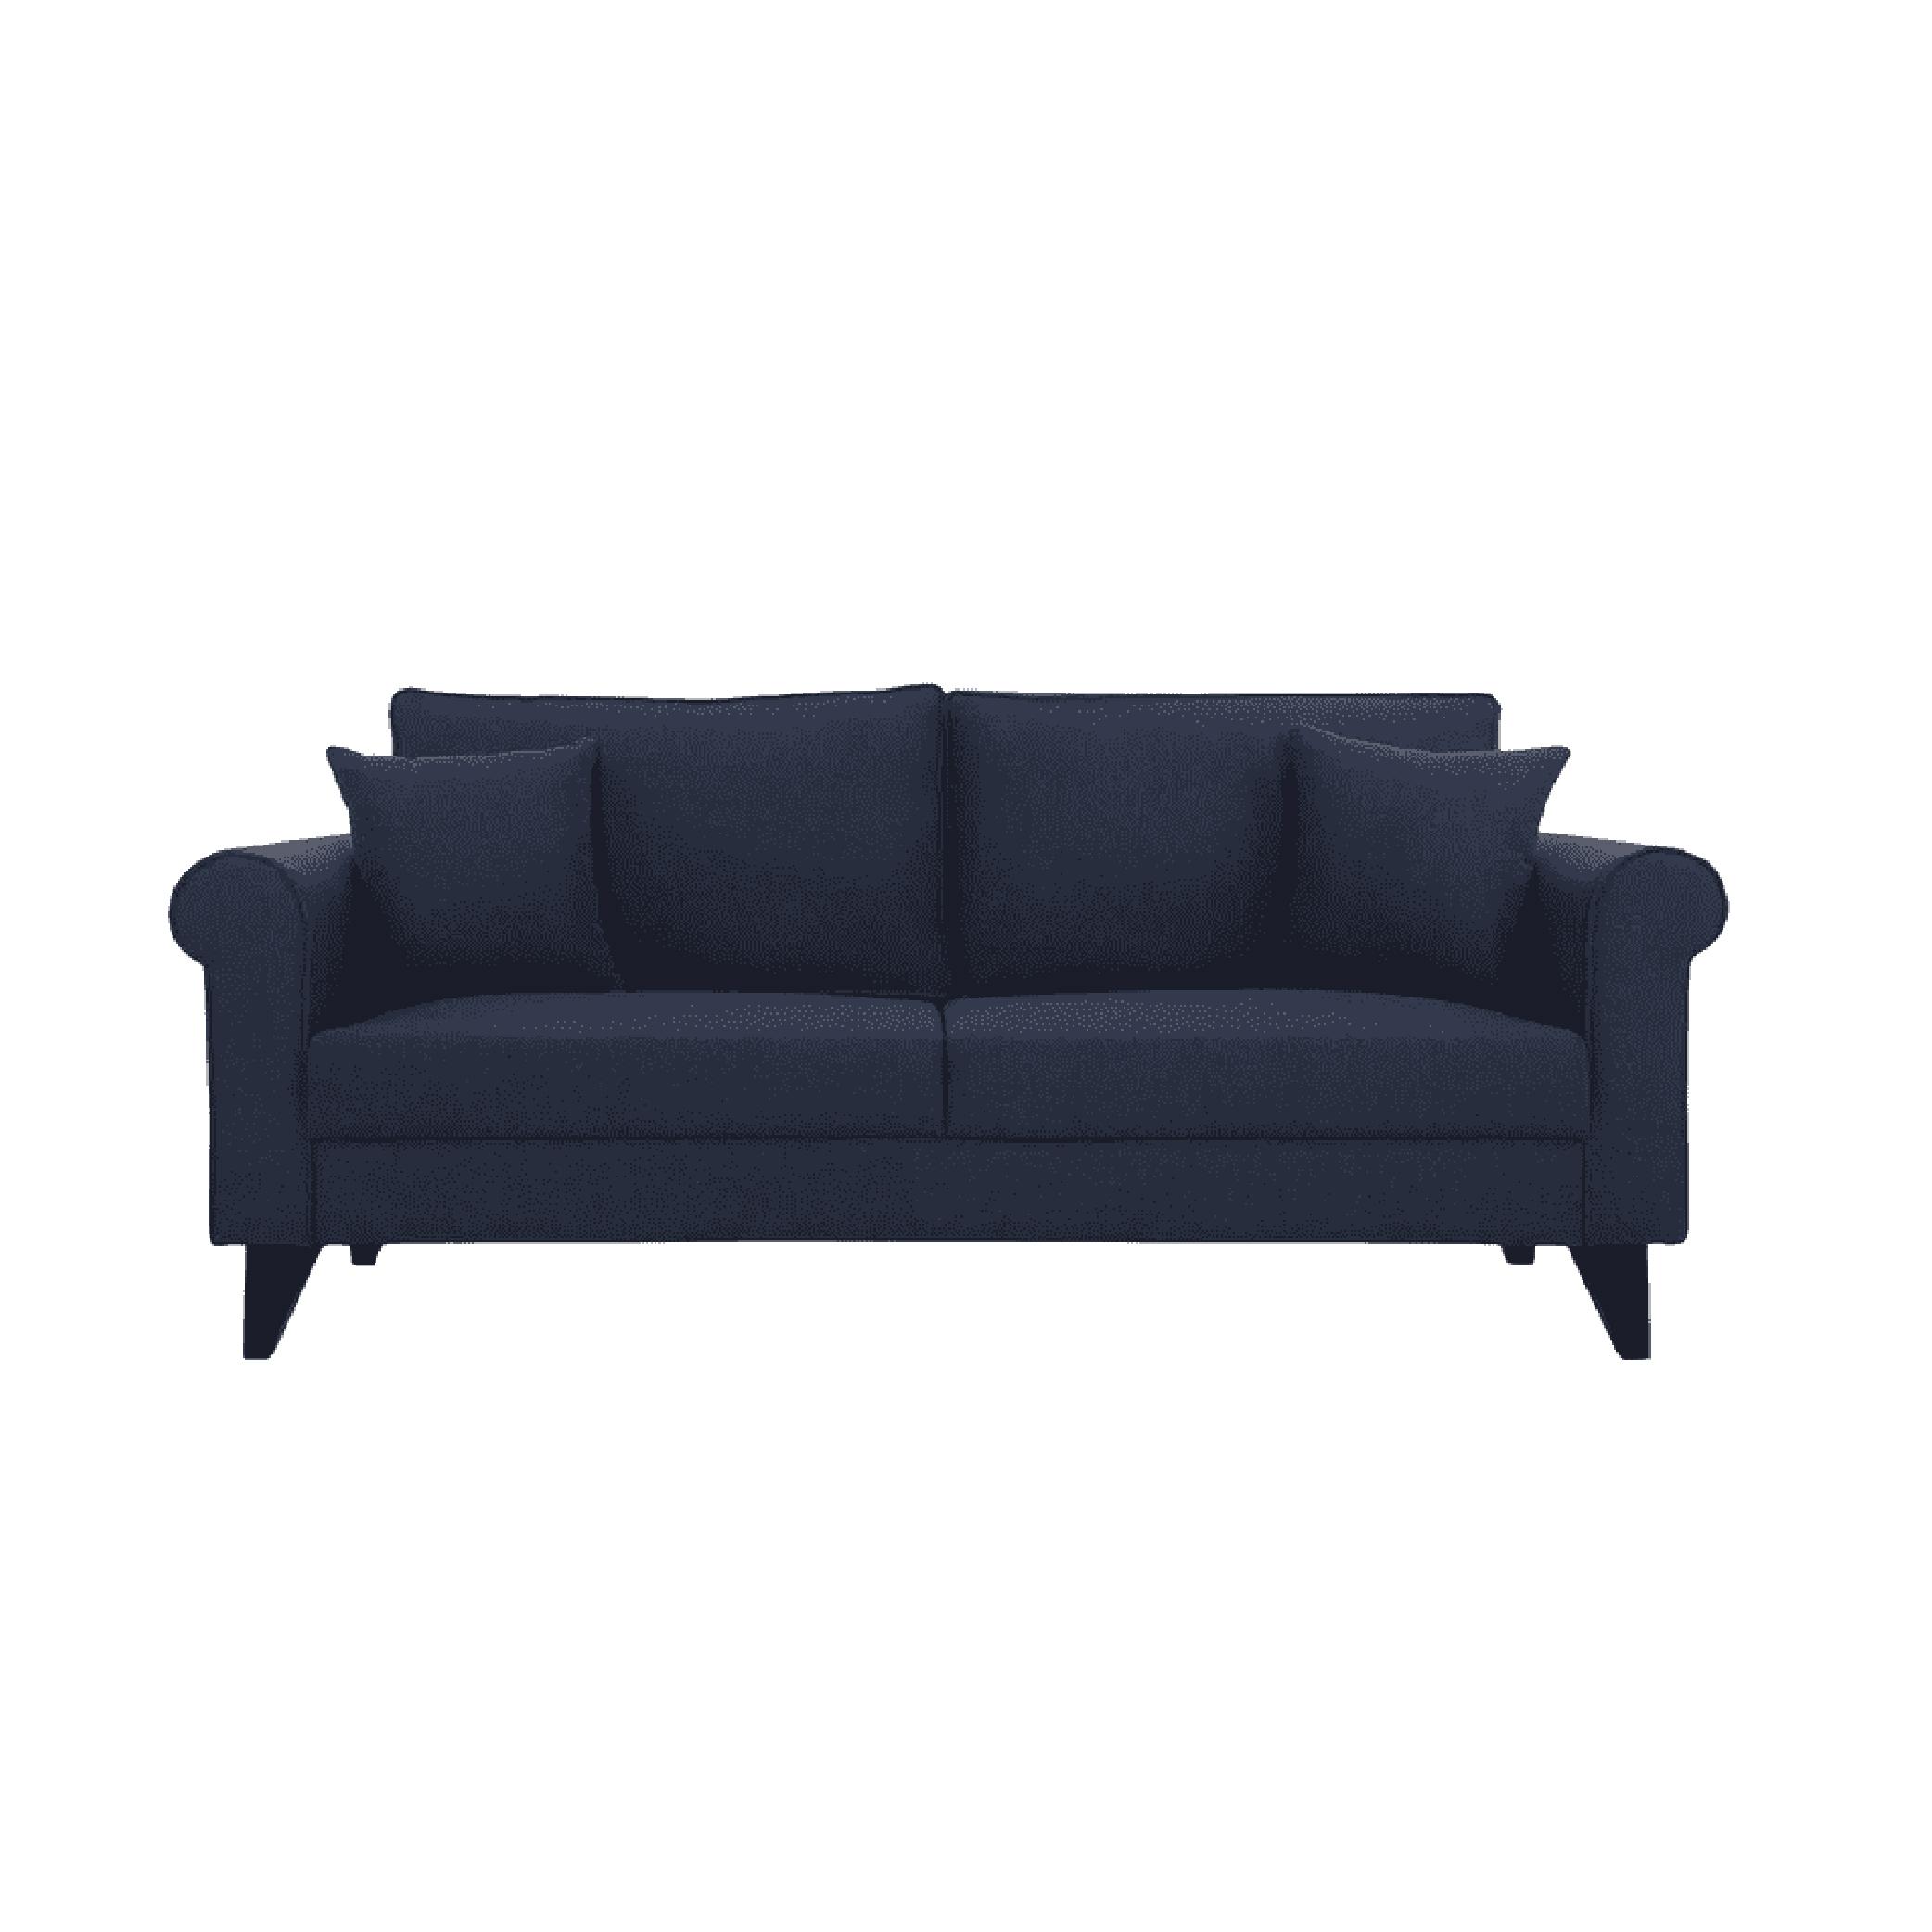 Sarno Three Seater Sofa in Navy Blue Colour